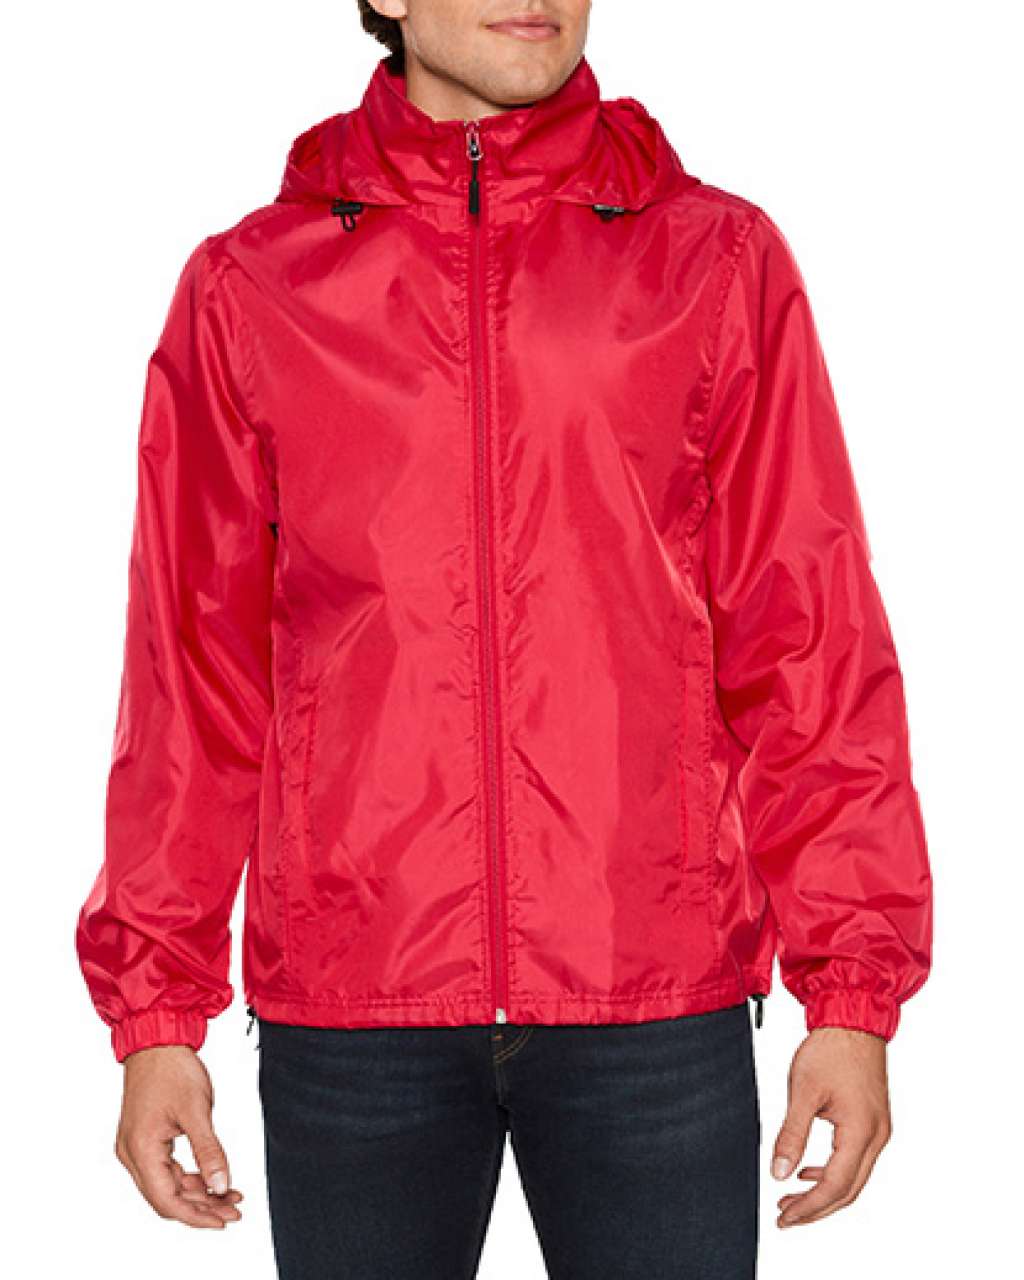 Gildan Hammer Unisex Windwear Jacket - red